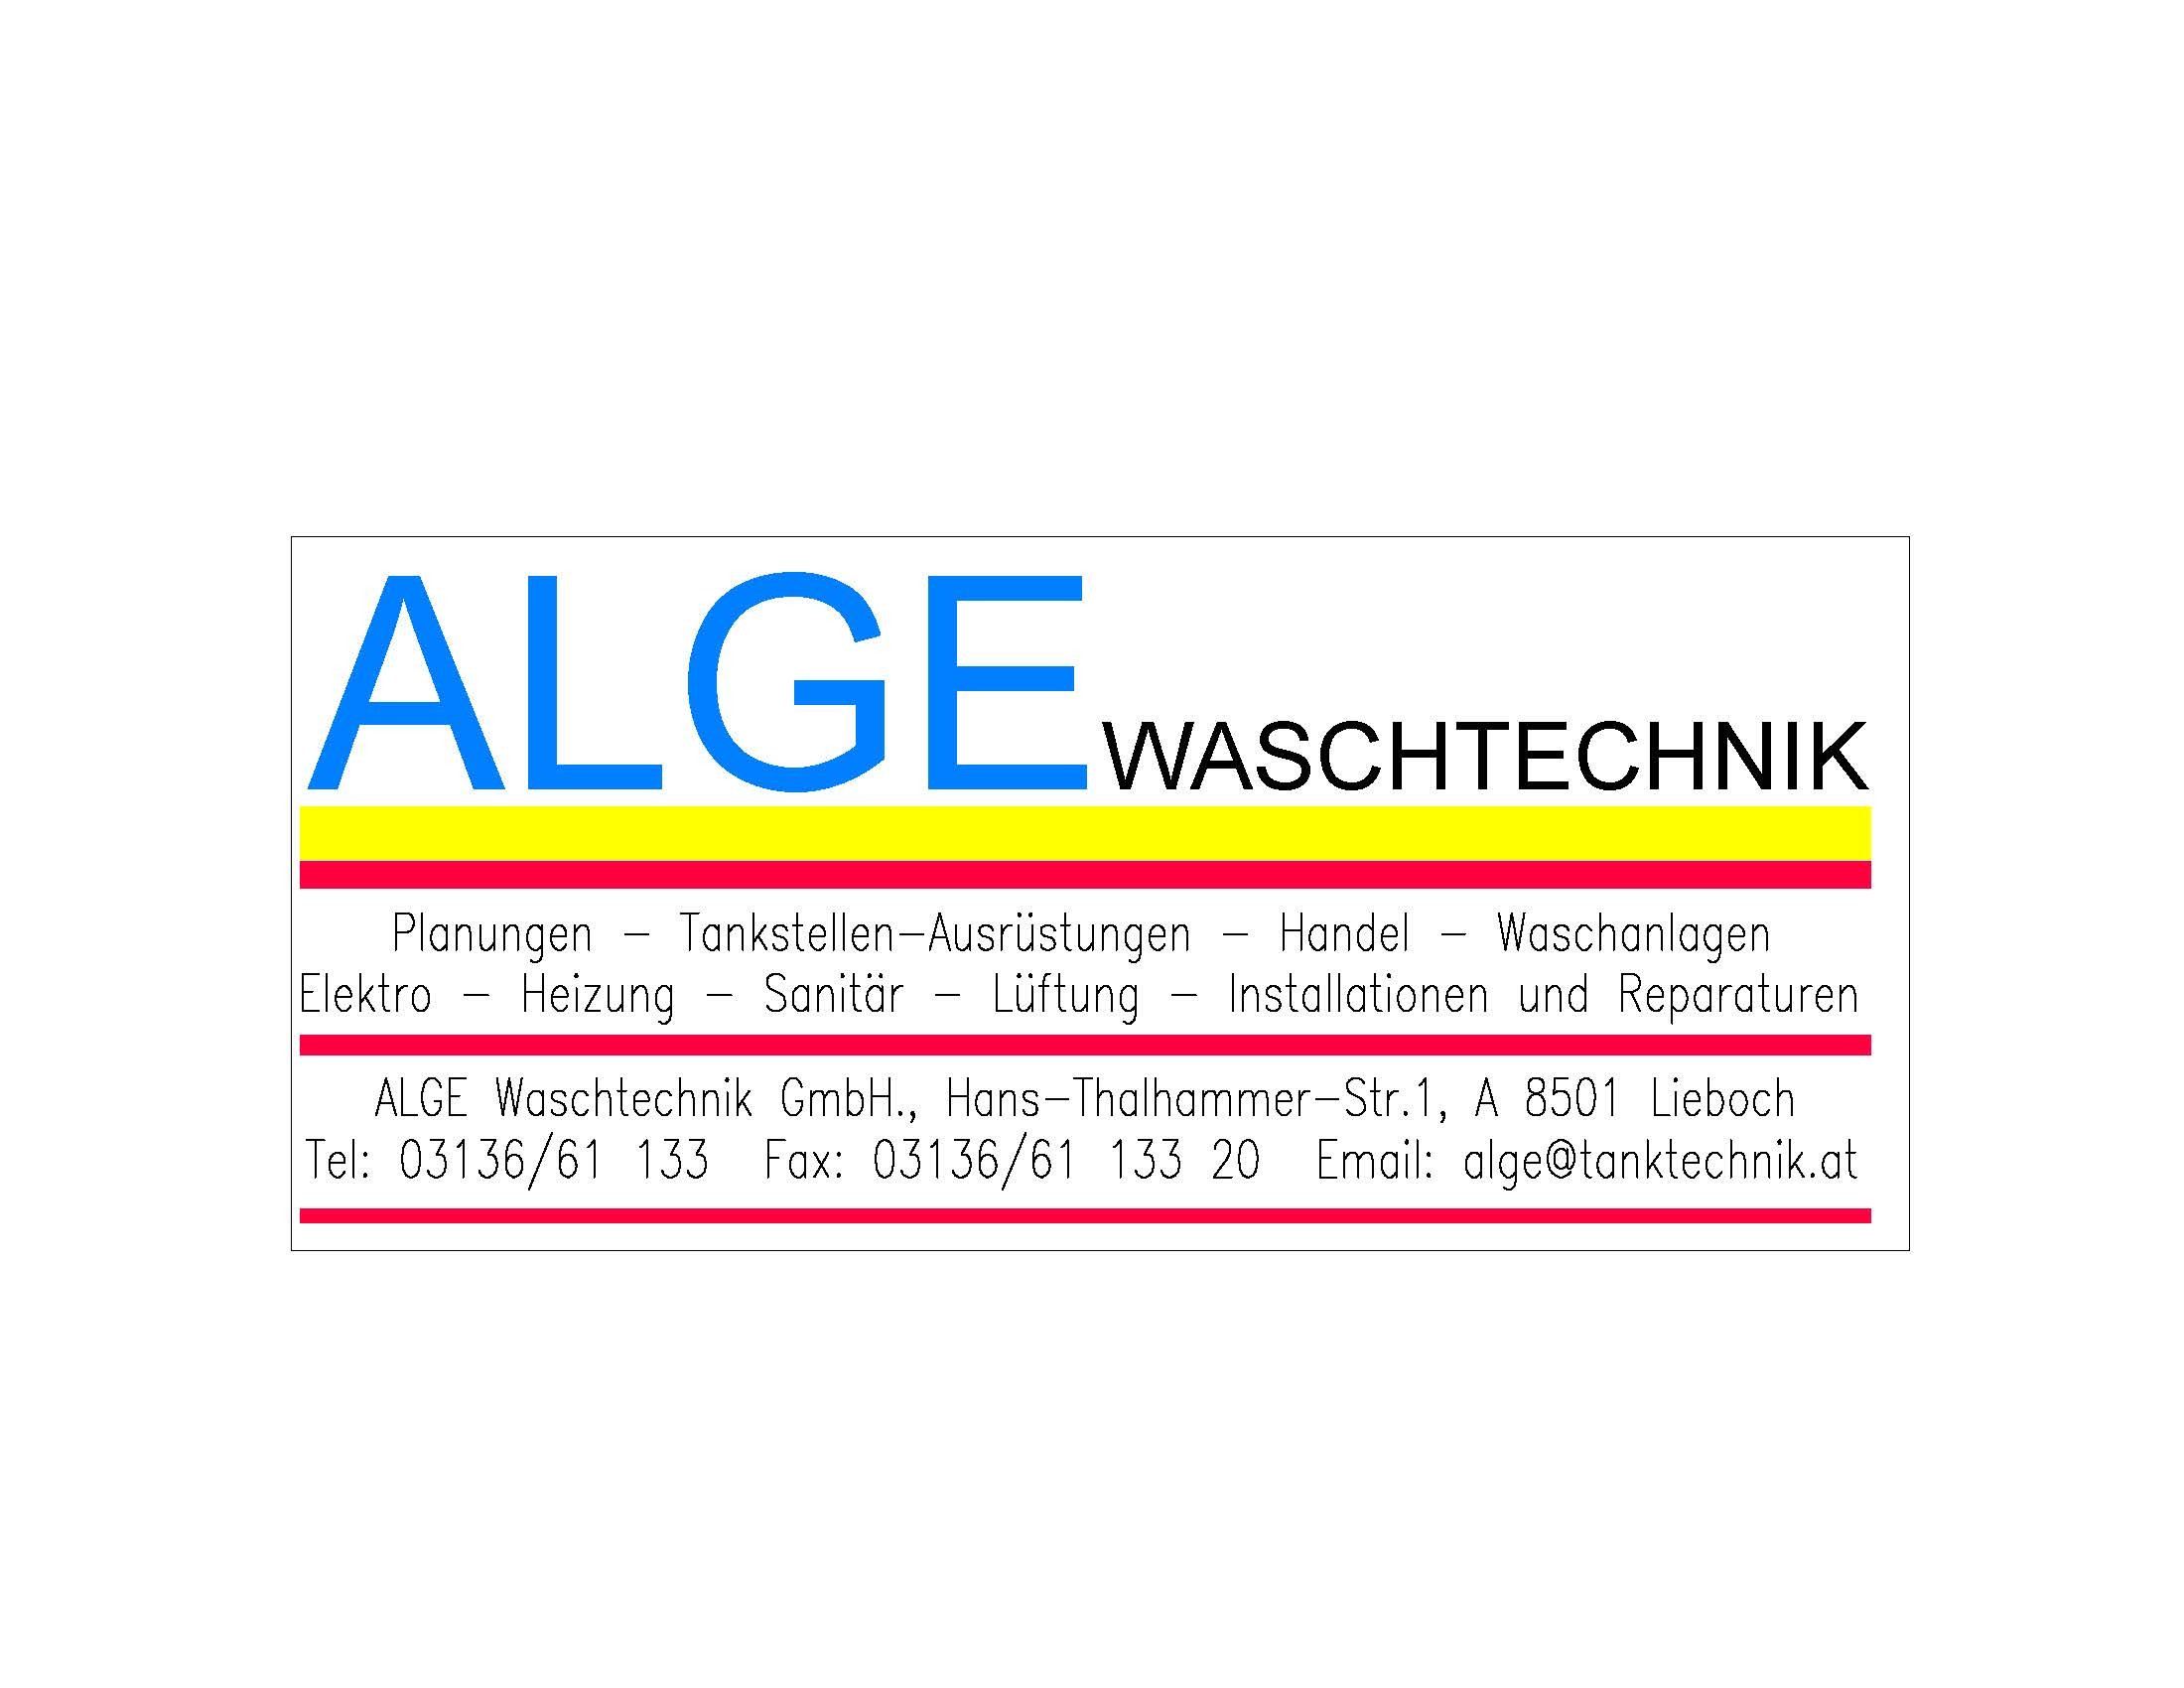 ALGE_Waschtechnik